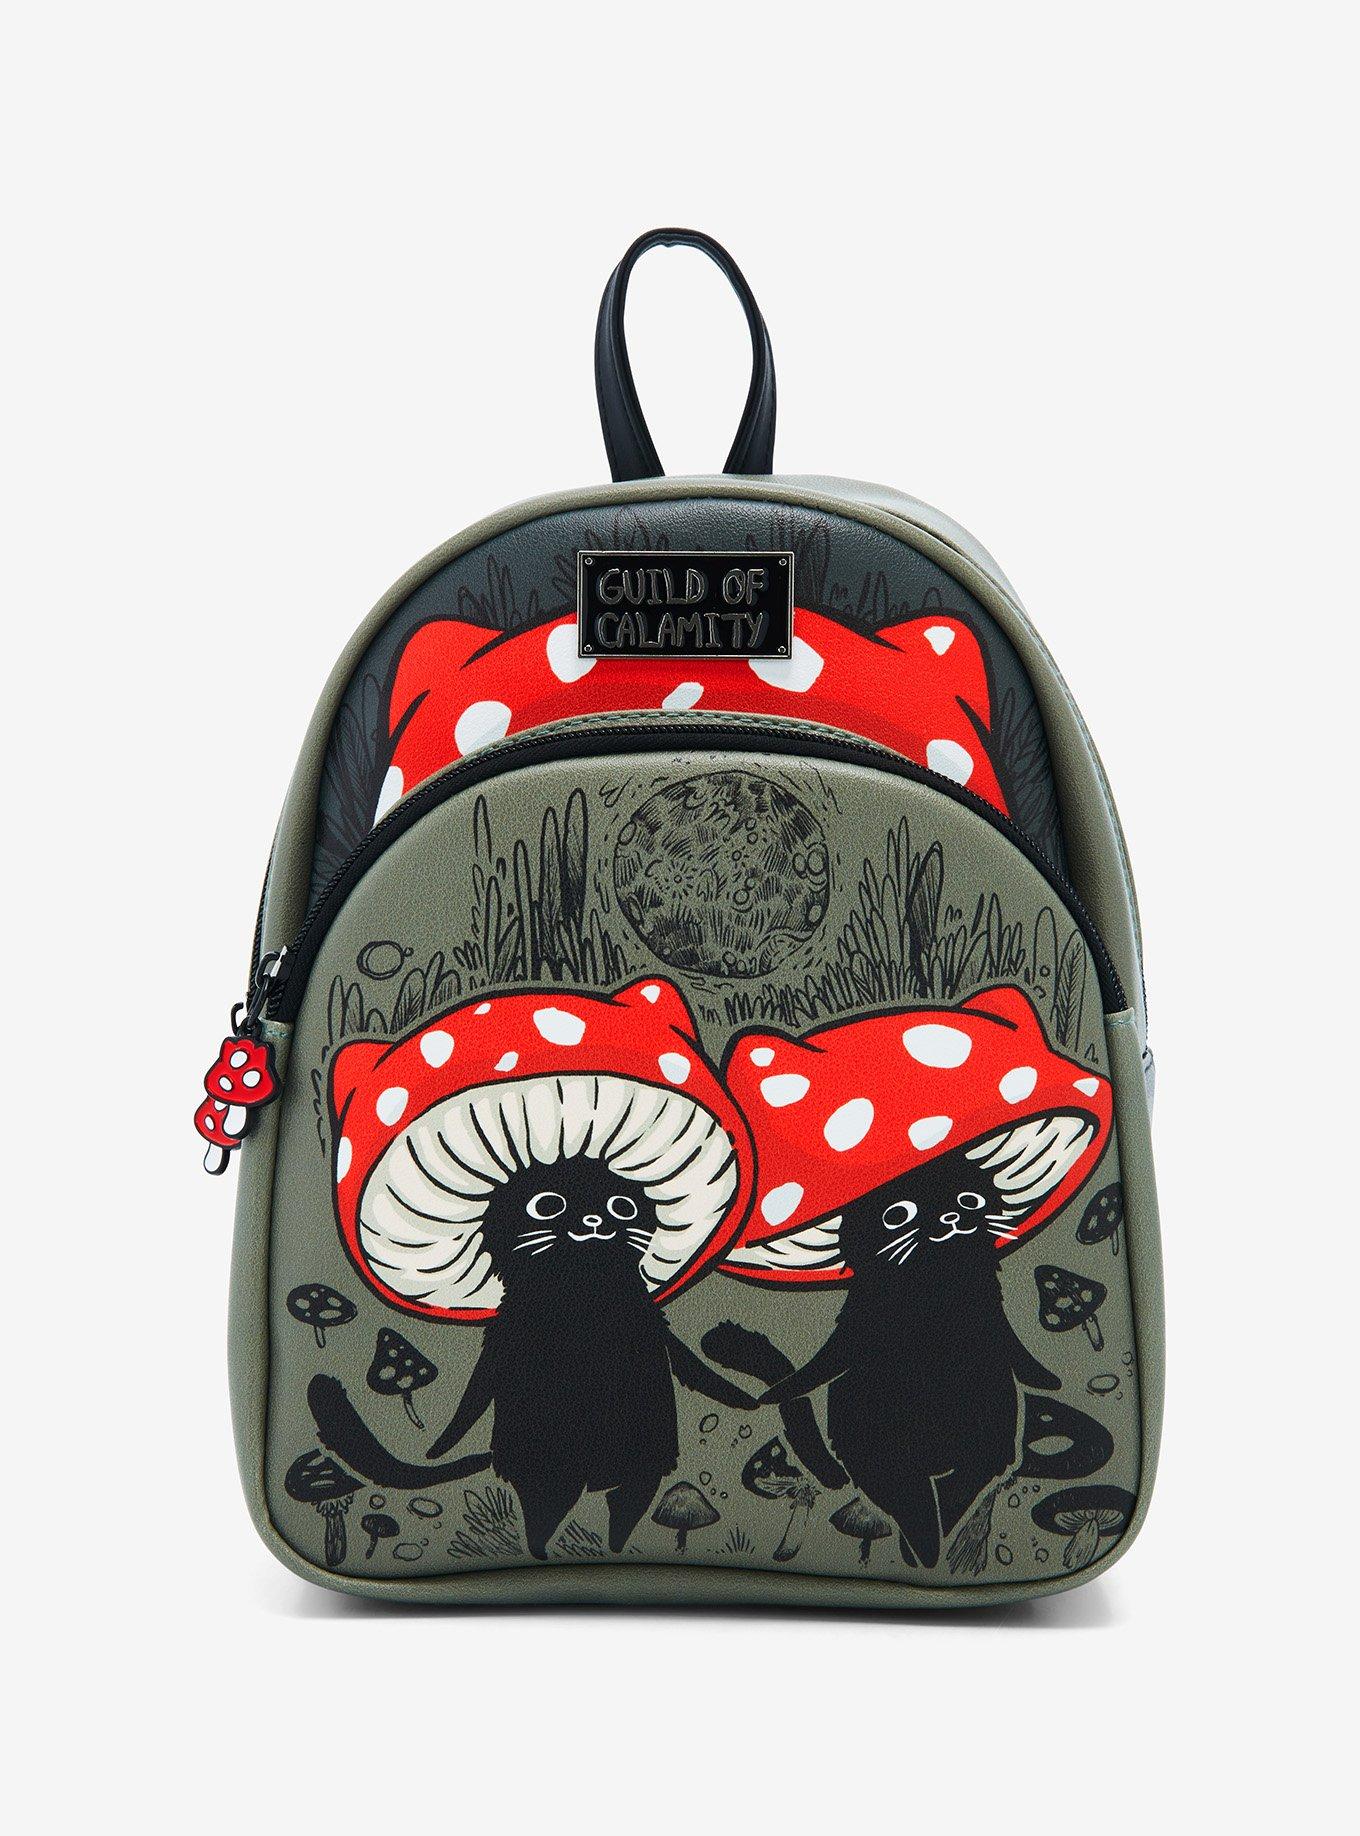 Guild Of Calamity Cat Mushroom Mini Backpack